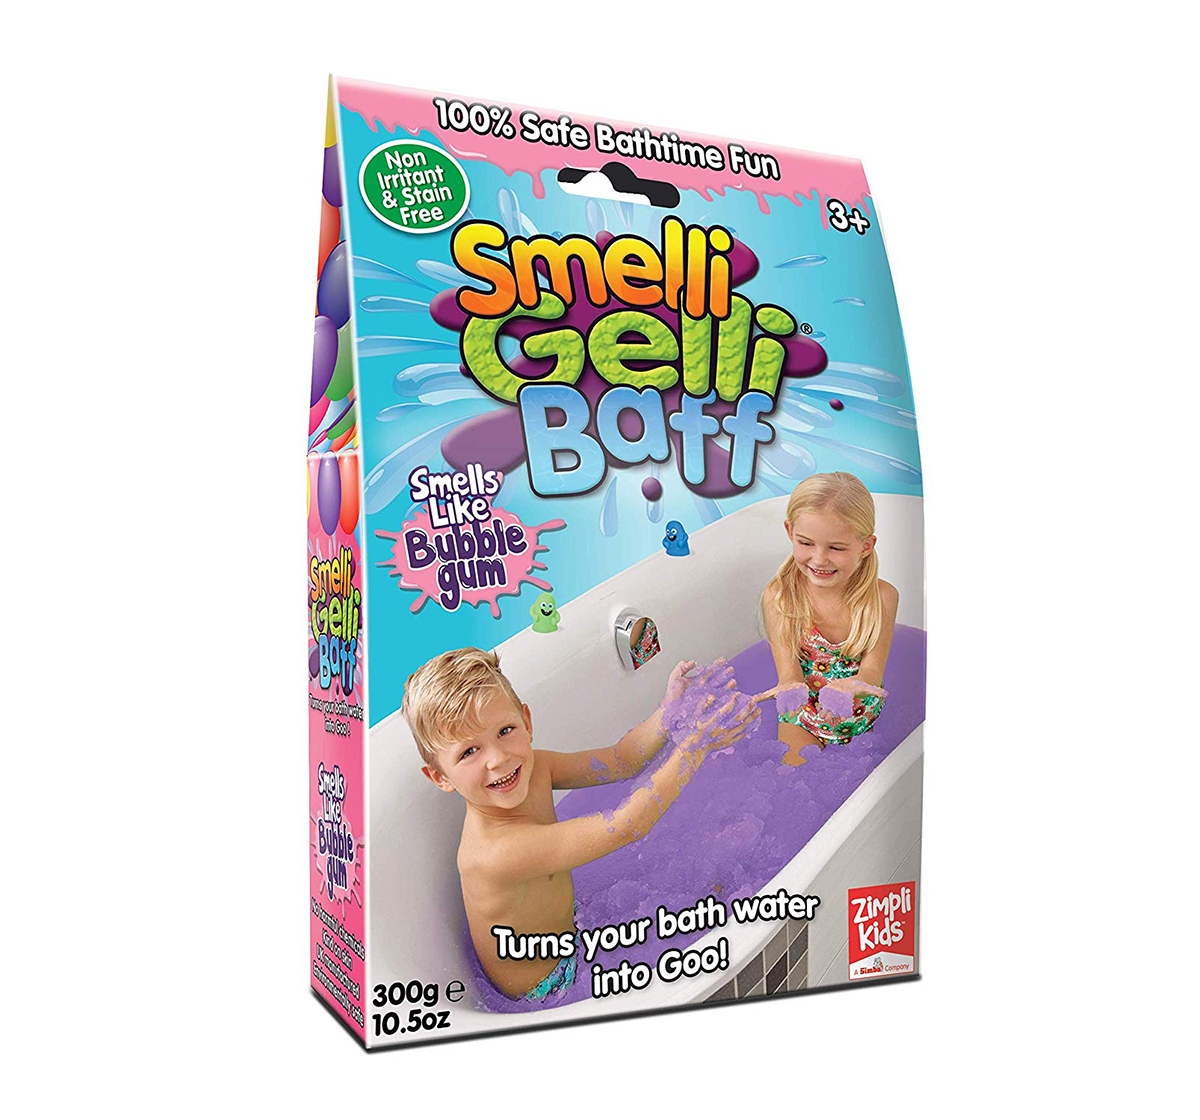 Zimpli Kids | Zimpli Kids Glittery Goo Gelli Baff - Sand, Slime & Others for Kids age 3Y+ (Purple)